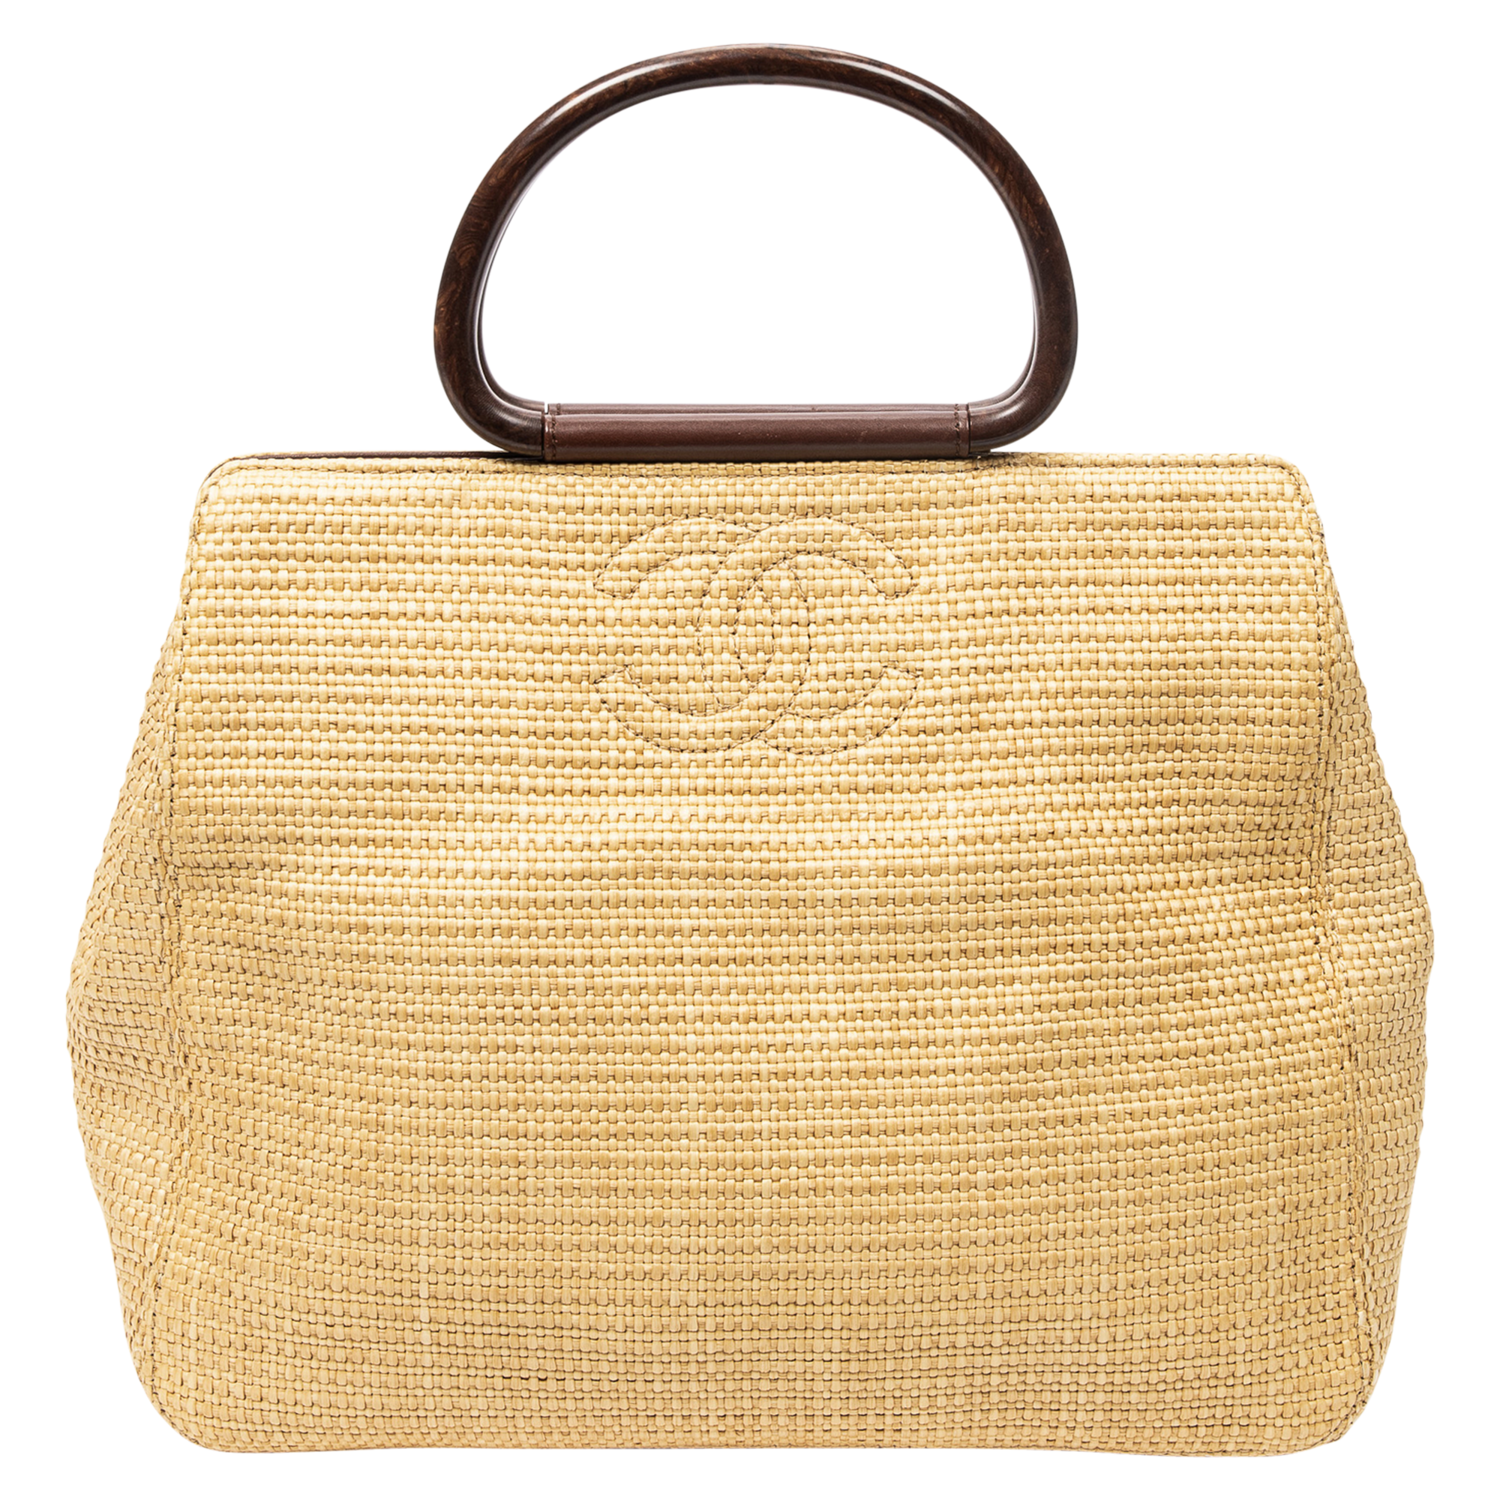 Chanel 2001 CC Top Handle Basket Weave Bag